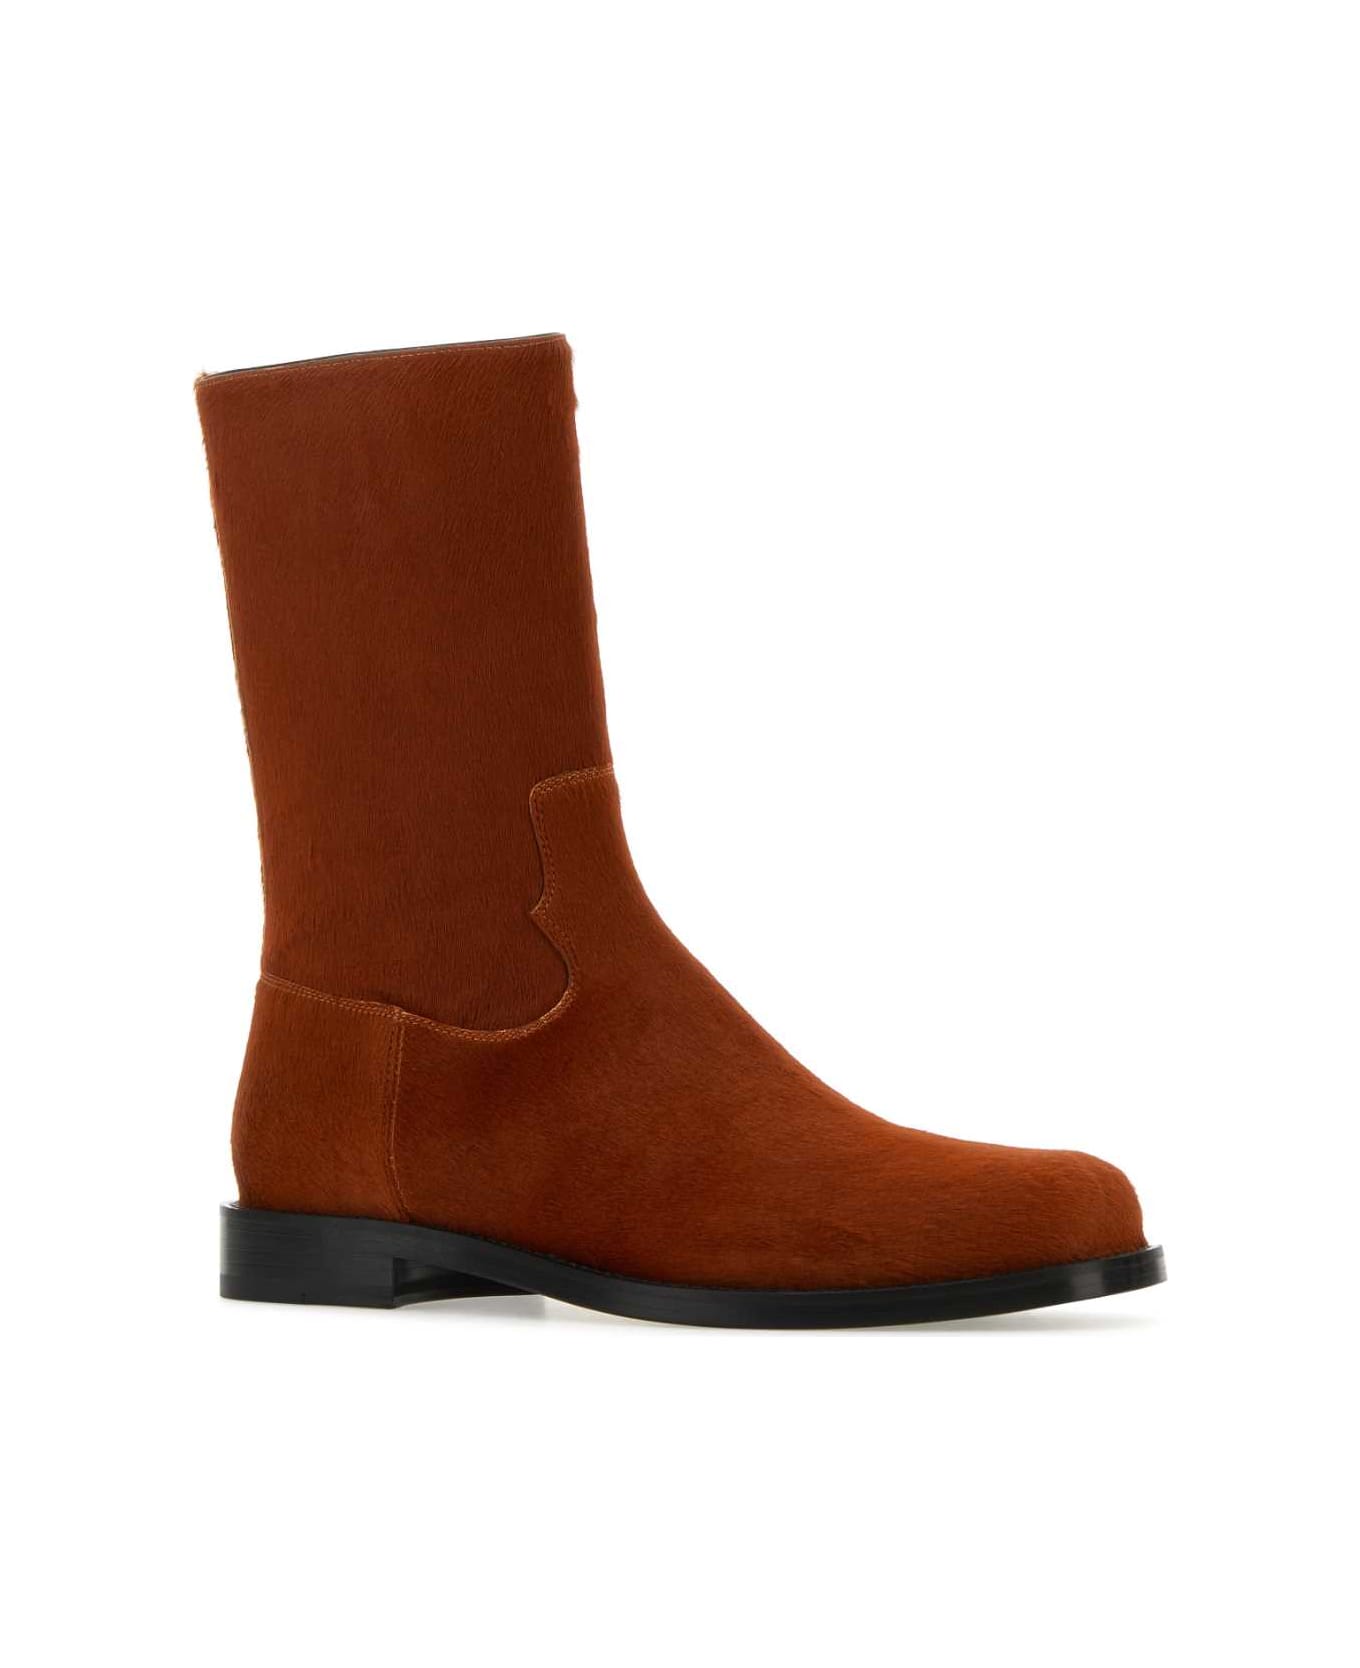 Dries Van Noten Brick Calfhair Ankle Boots - TAN